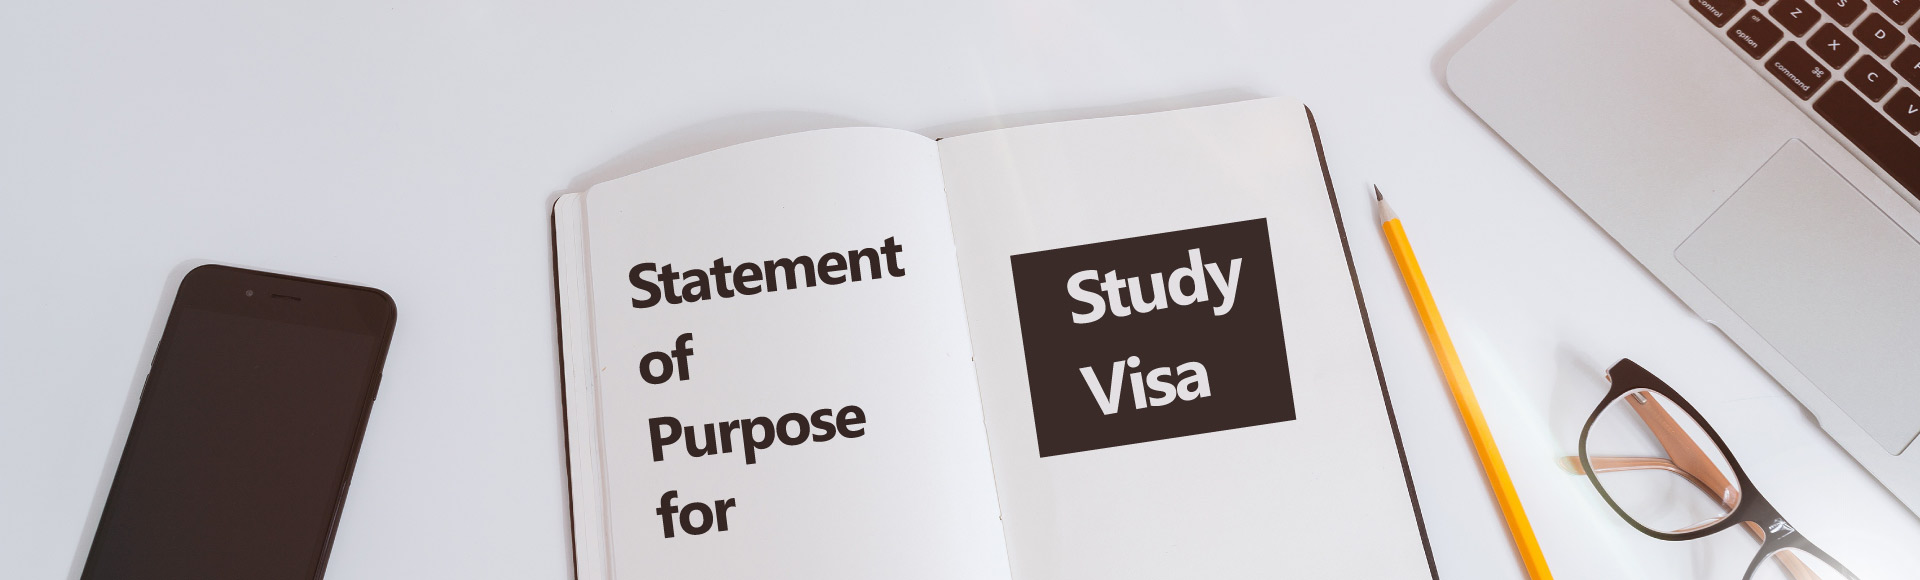 Statement of Purpose for Study Visa